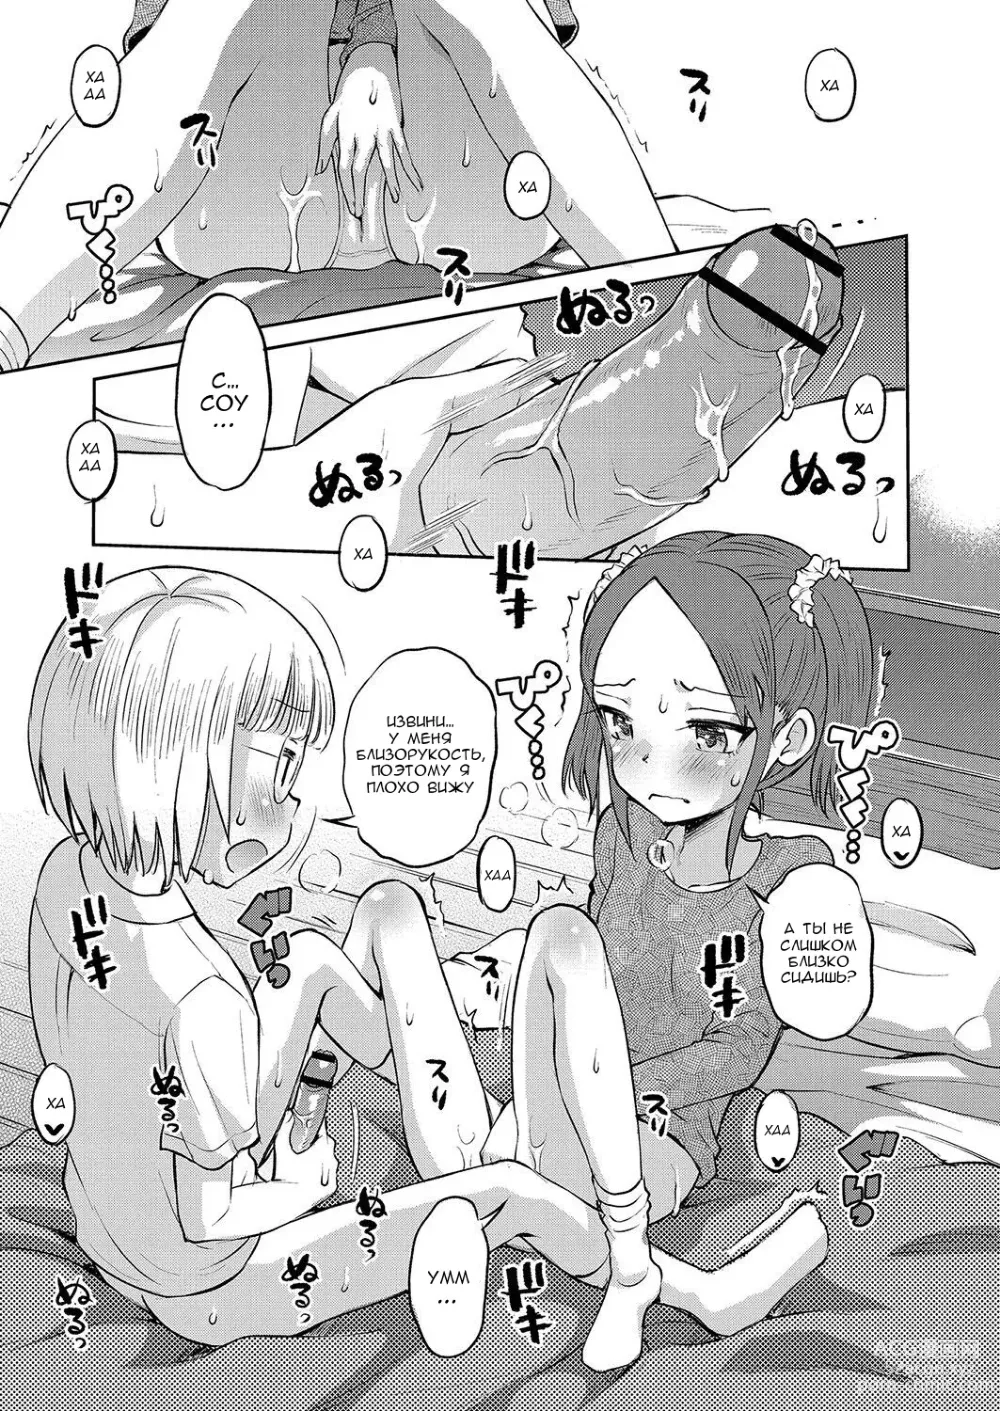 Page 7 of manga Ради знаний